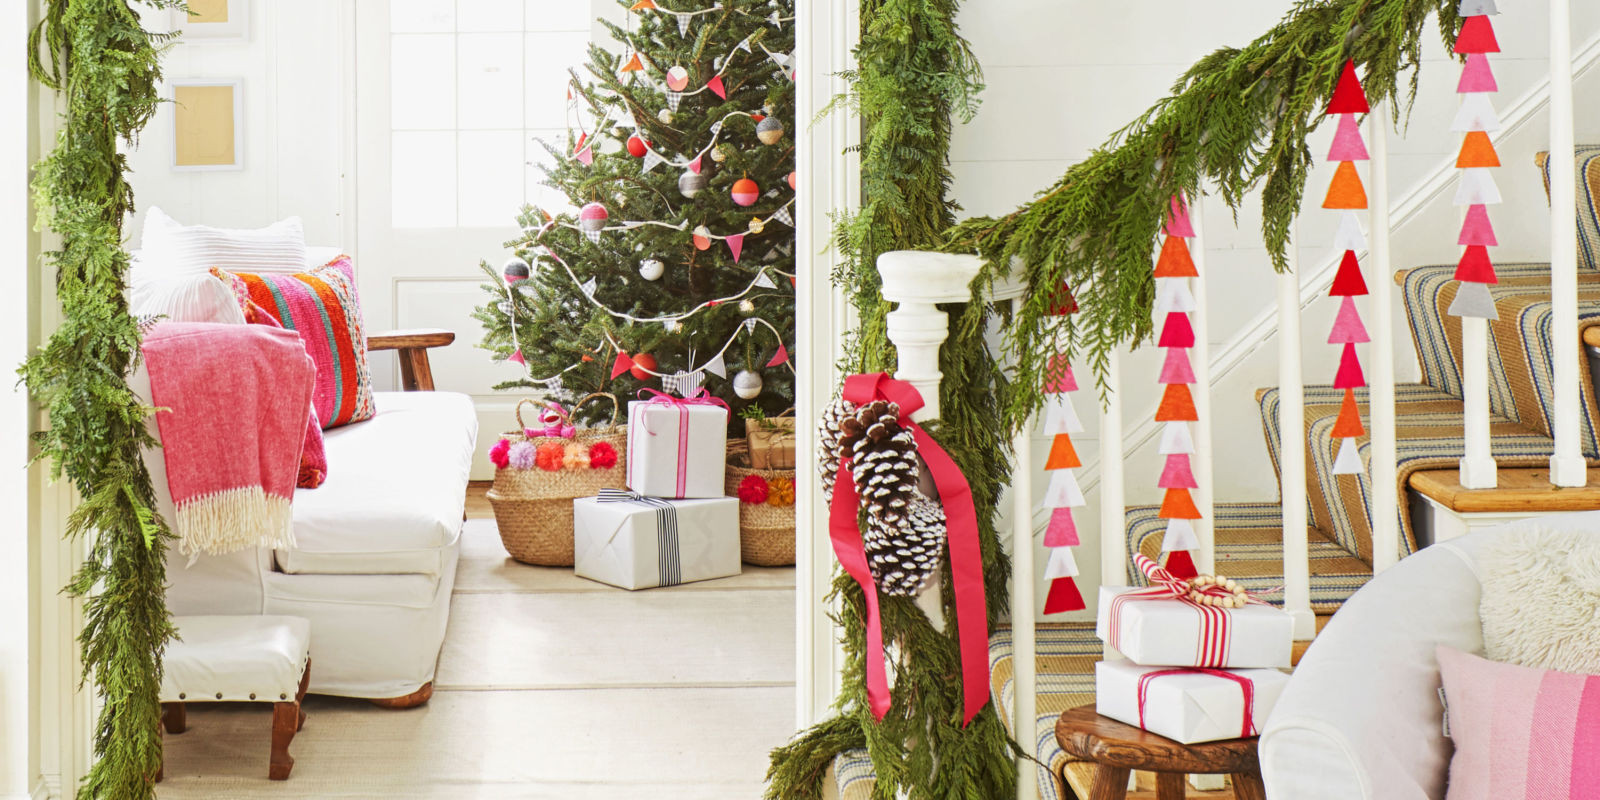 Best ideas about DIY Christmas Home Decor
. Save or Pin 80 DIY Christmas Decorations Easy Christmas Decorating Ideas Now.